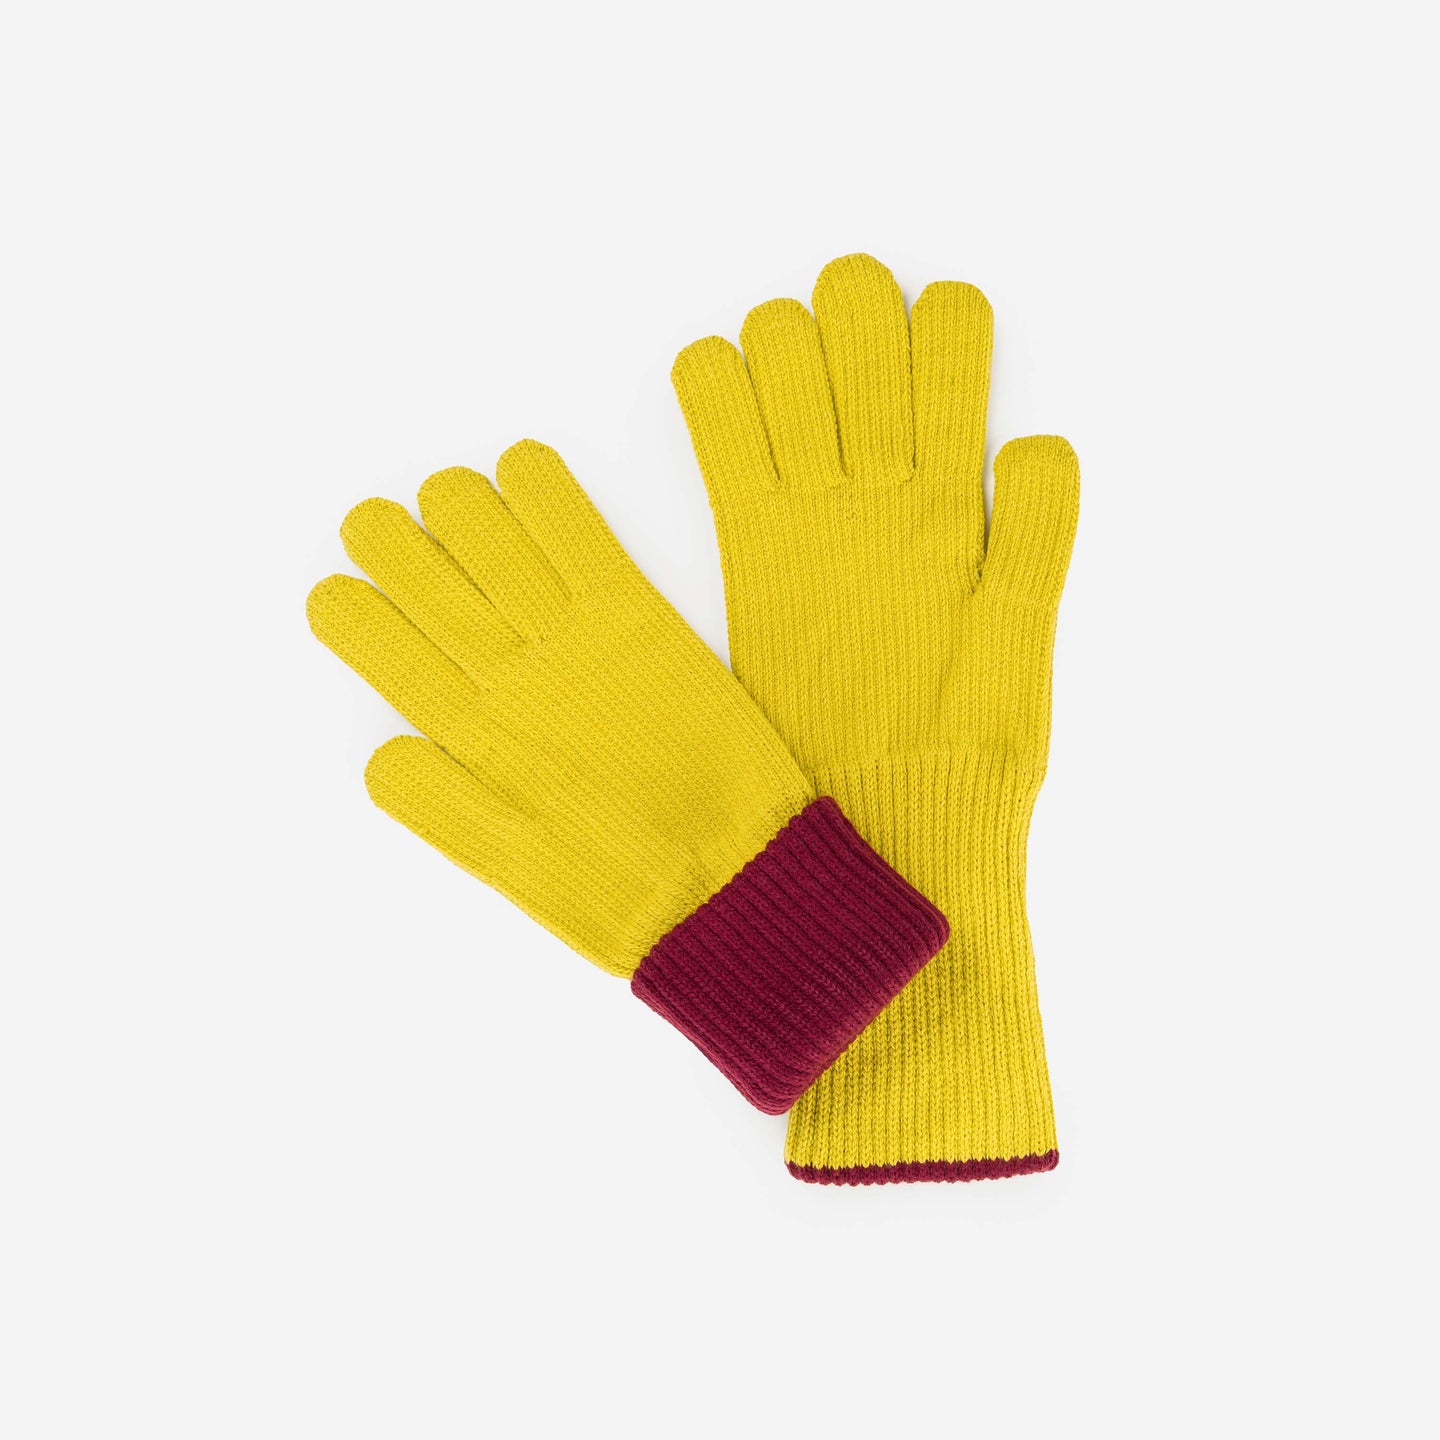 Long Rib Knit Gloves Contrast Cuff